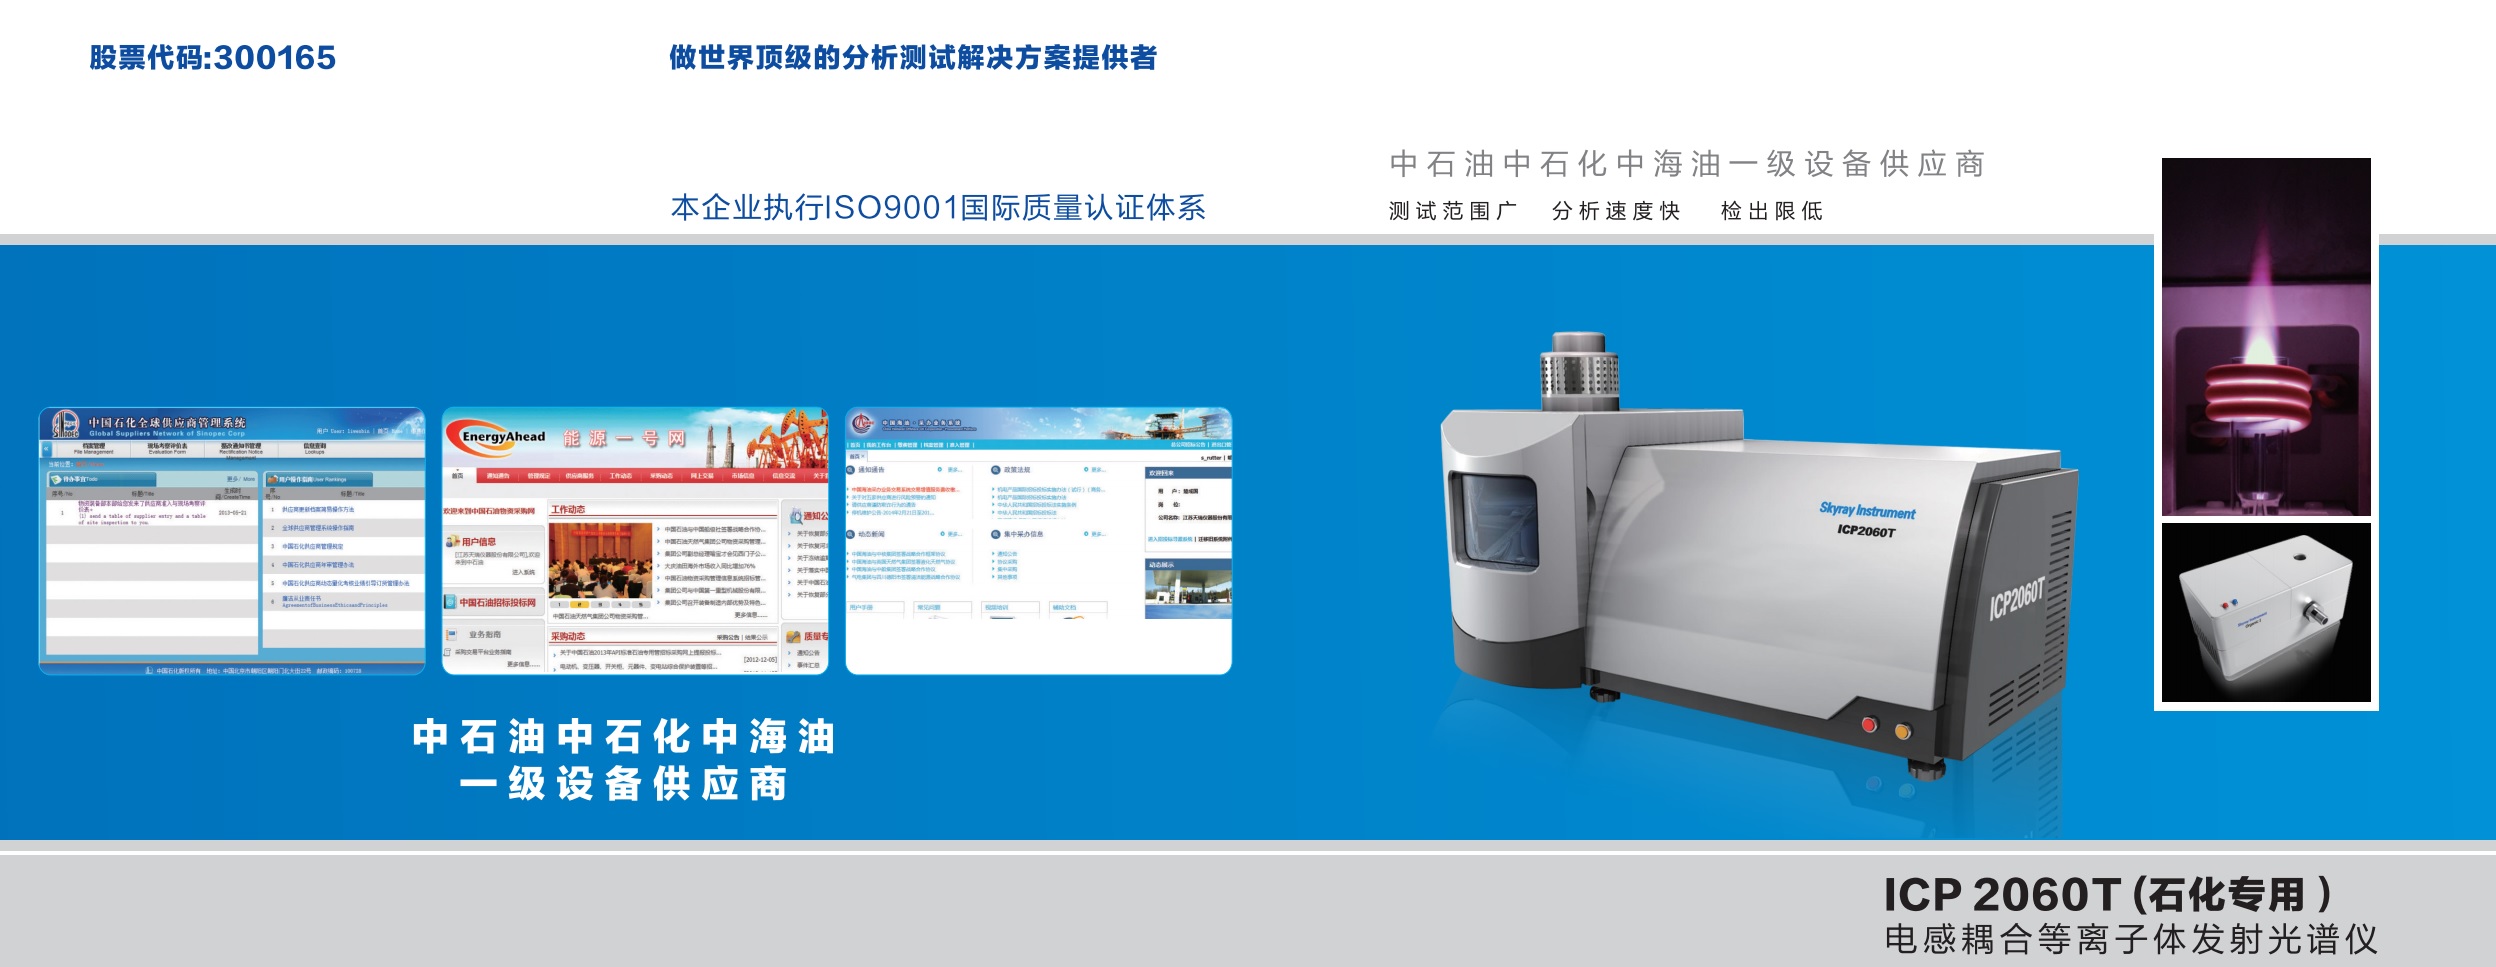 Jiangsu Skyray Instrument Co., Ltd.-Single channel scanning inductively coupled plasma atomic emission spectrometer